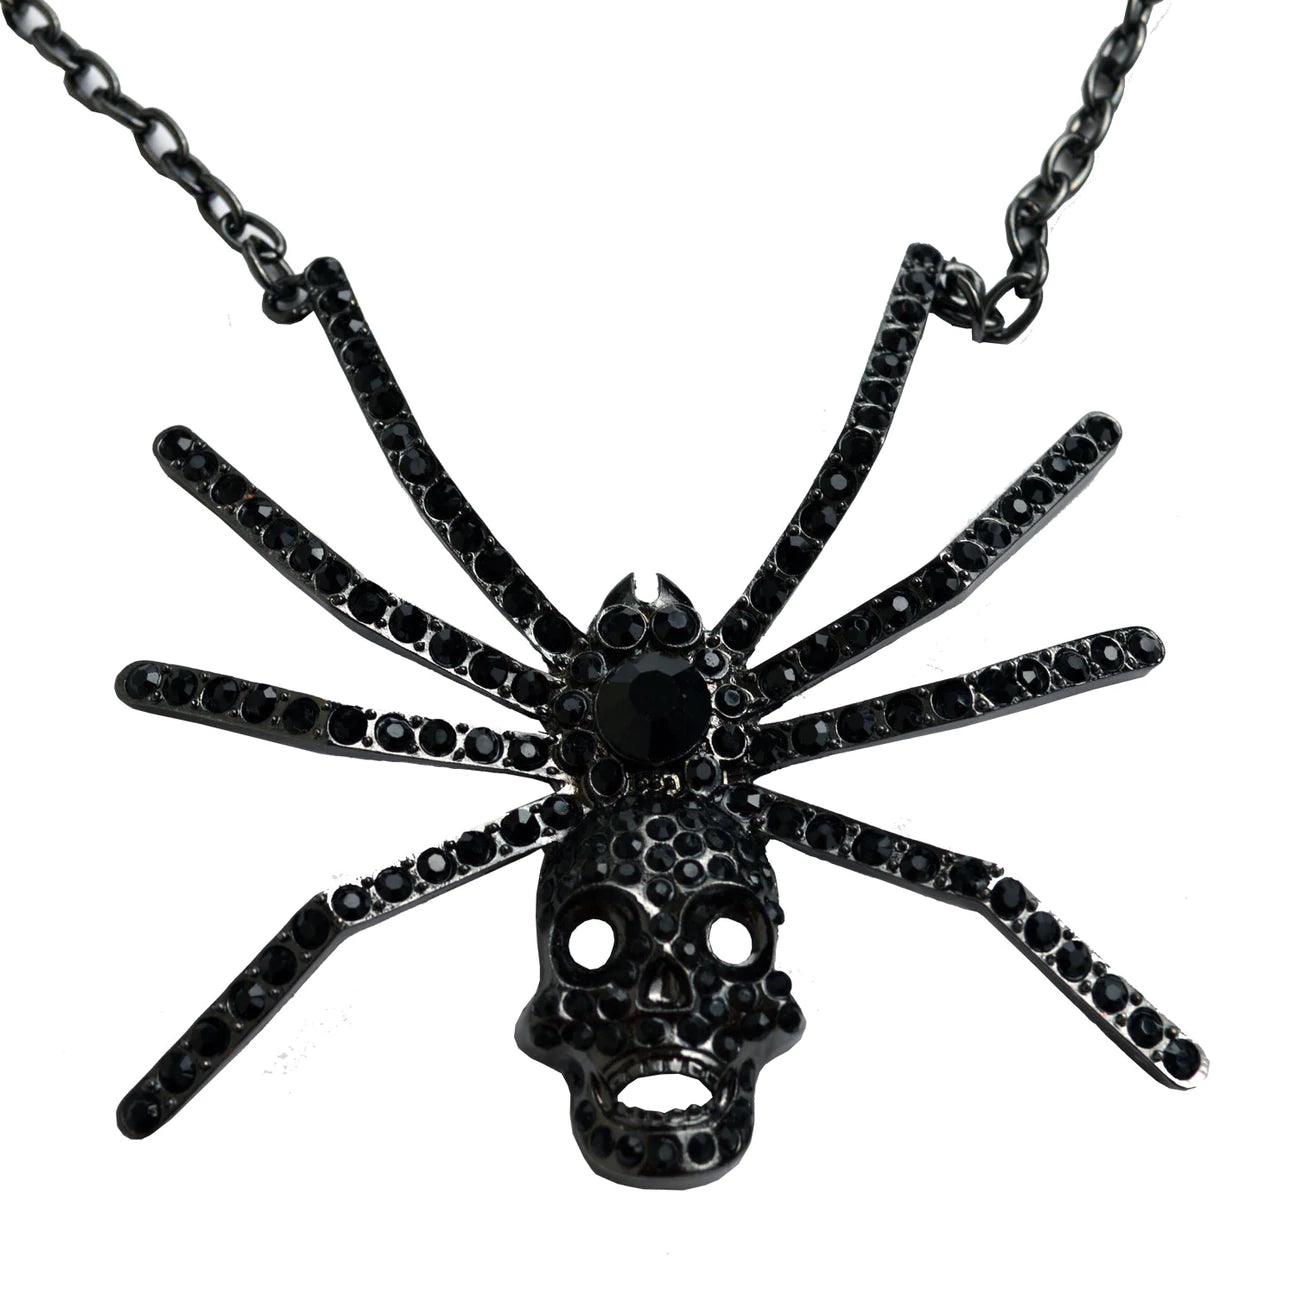 Dia Spider Skull Necklace Black